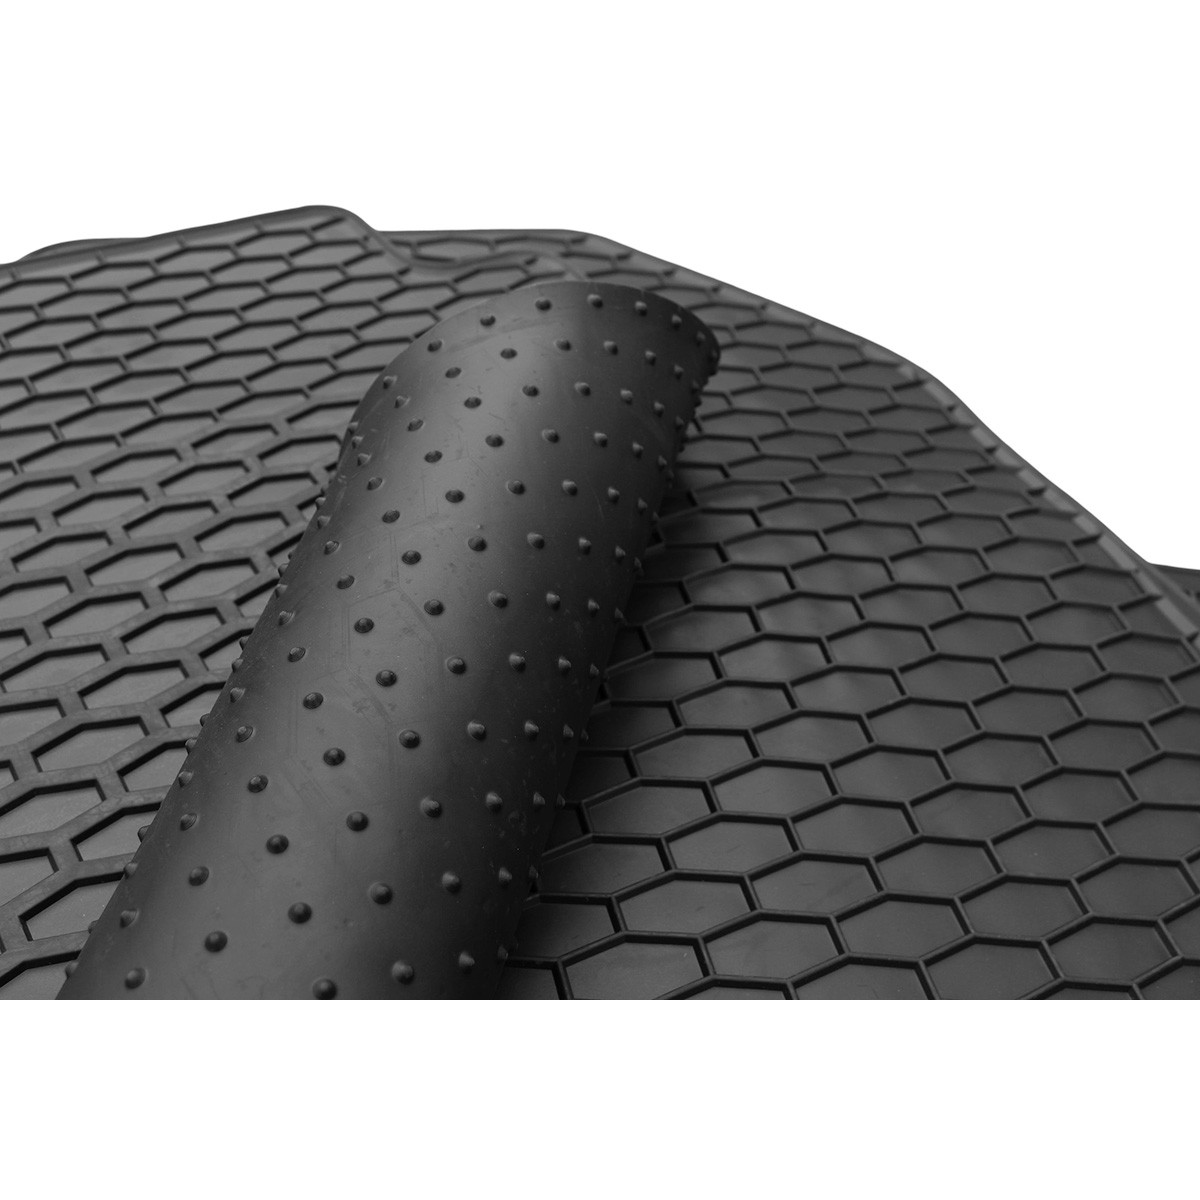 Rubber mats VOLKSWAGEN Golf VI 2008-2013 (, round clips) / P223304 / black